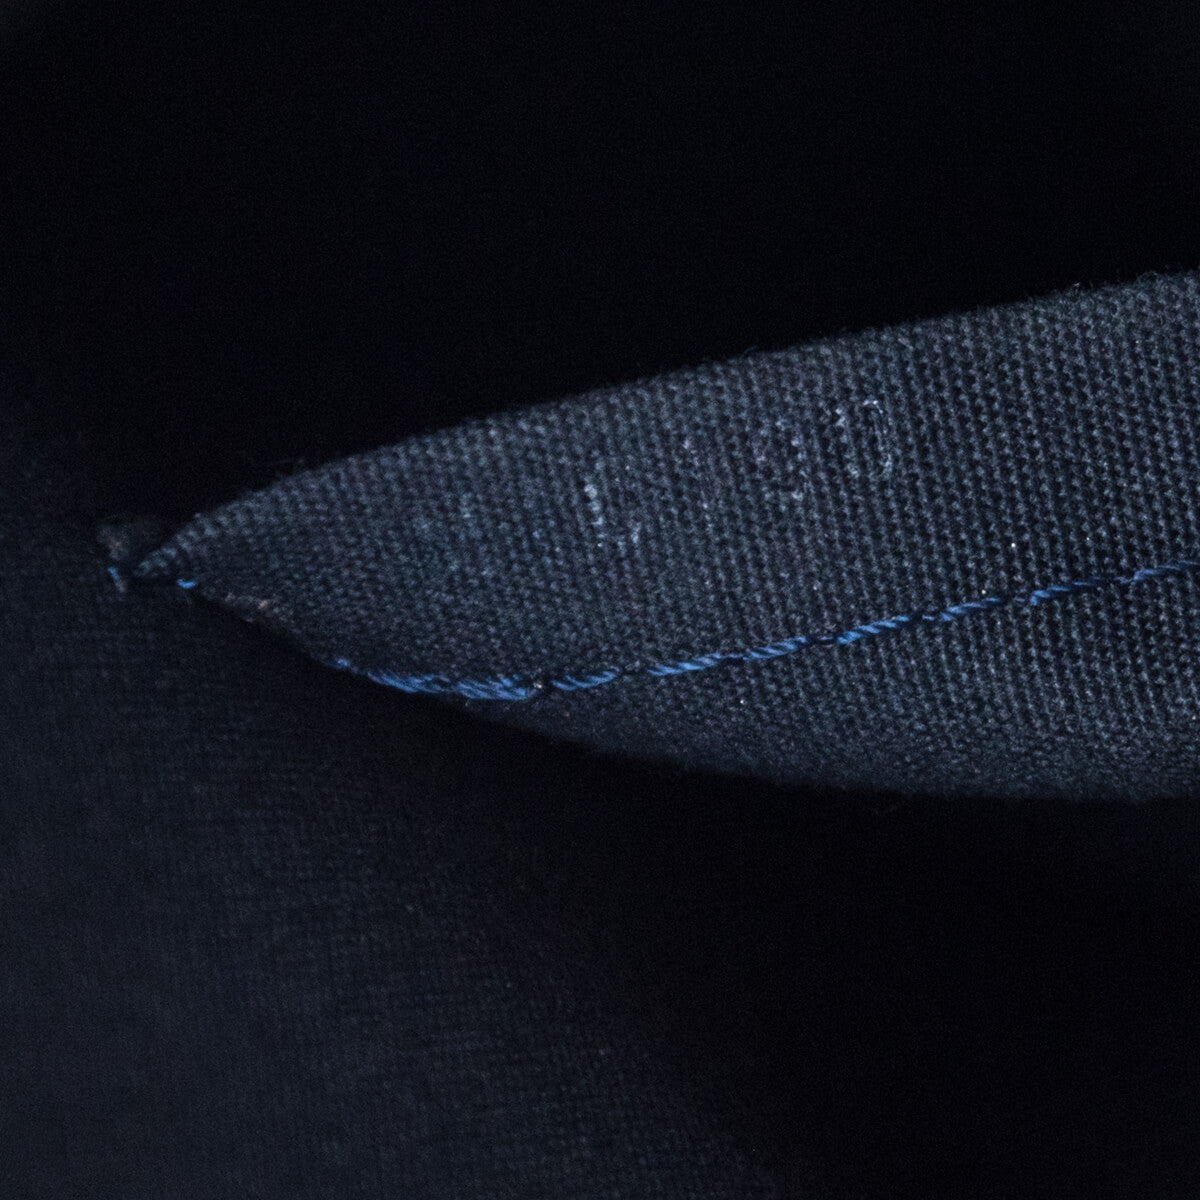 Louis Vuitton Bleu Nuit Monogram Vernis Alma PM - Shop Preloved LV